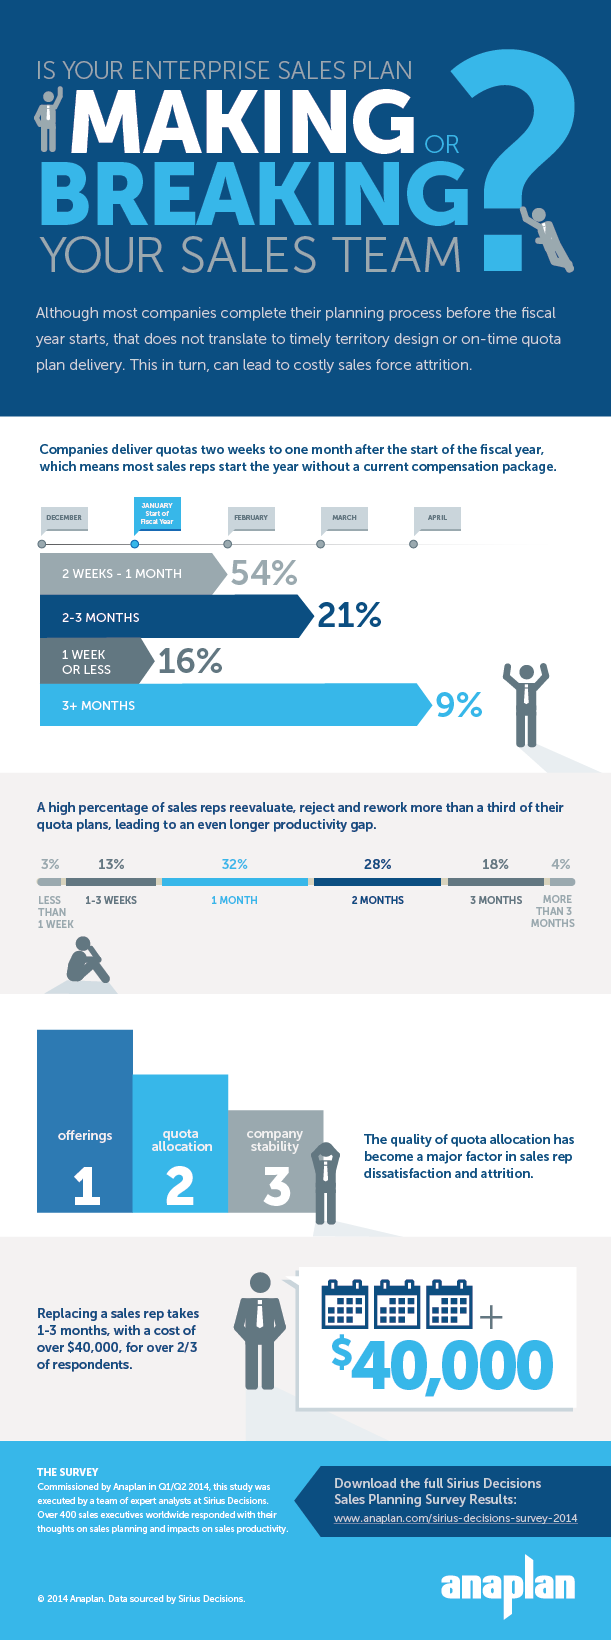 Anaplan_Sirius_Decisions_Survey_2014_Infographic